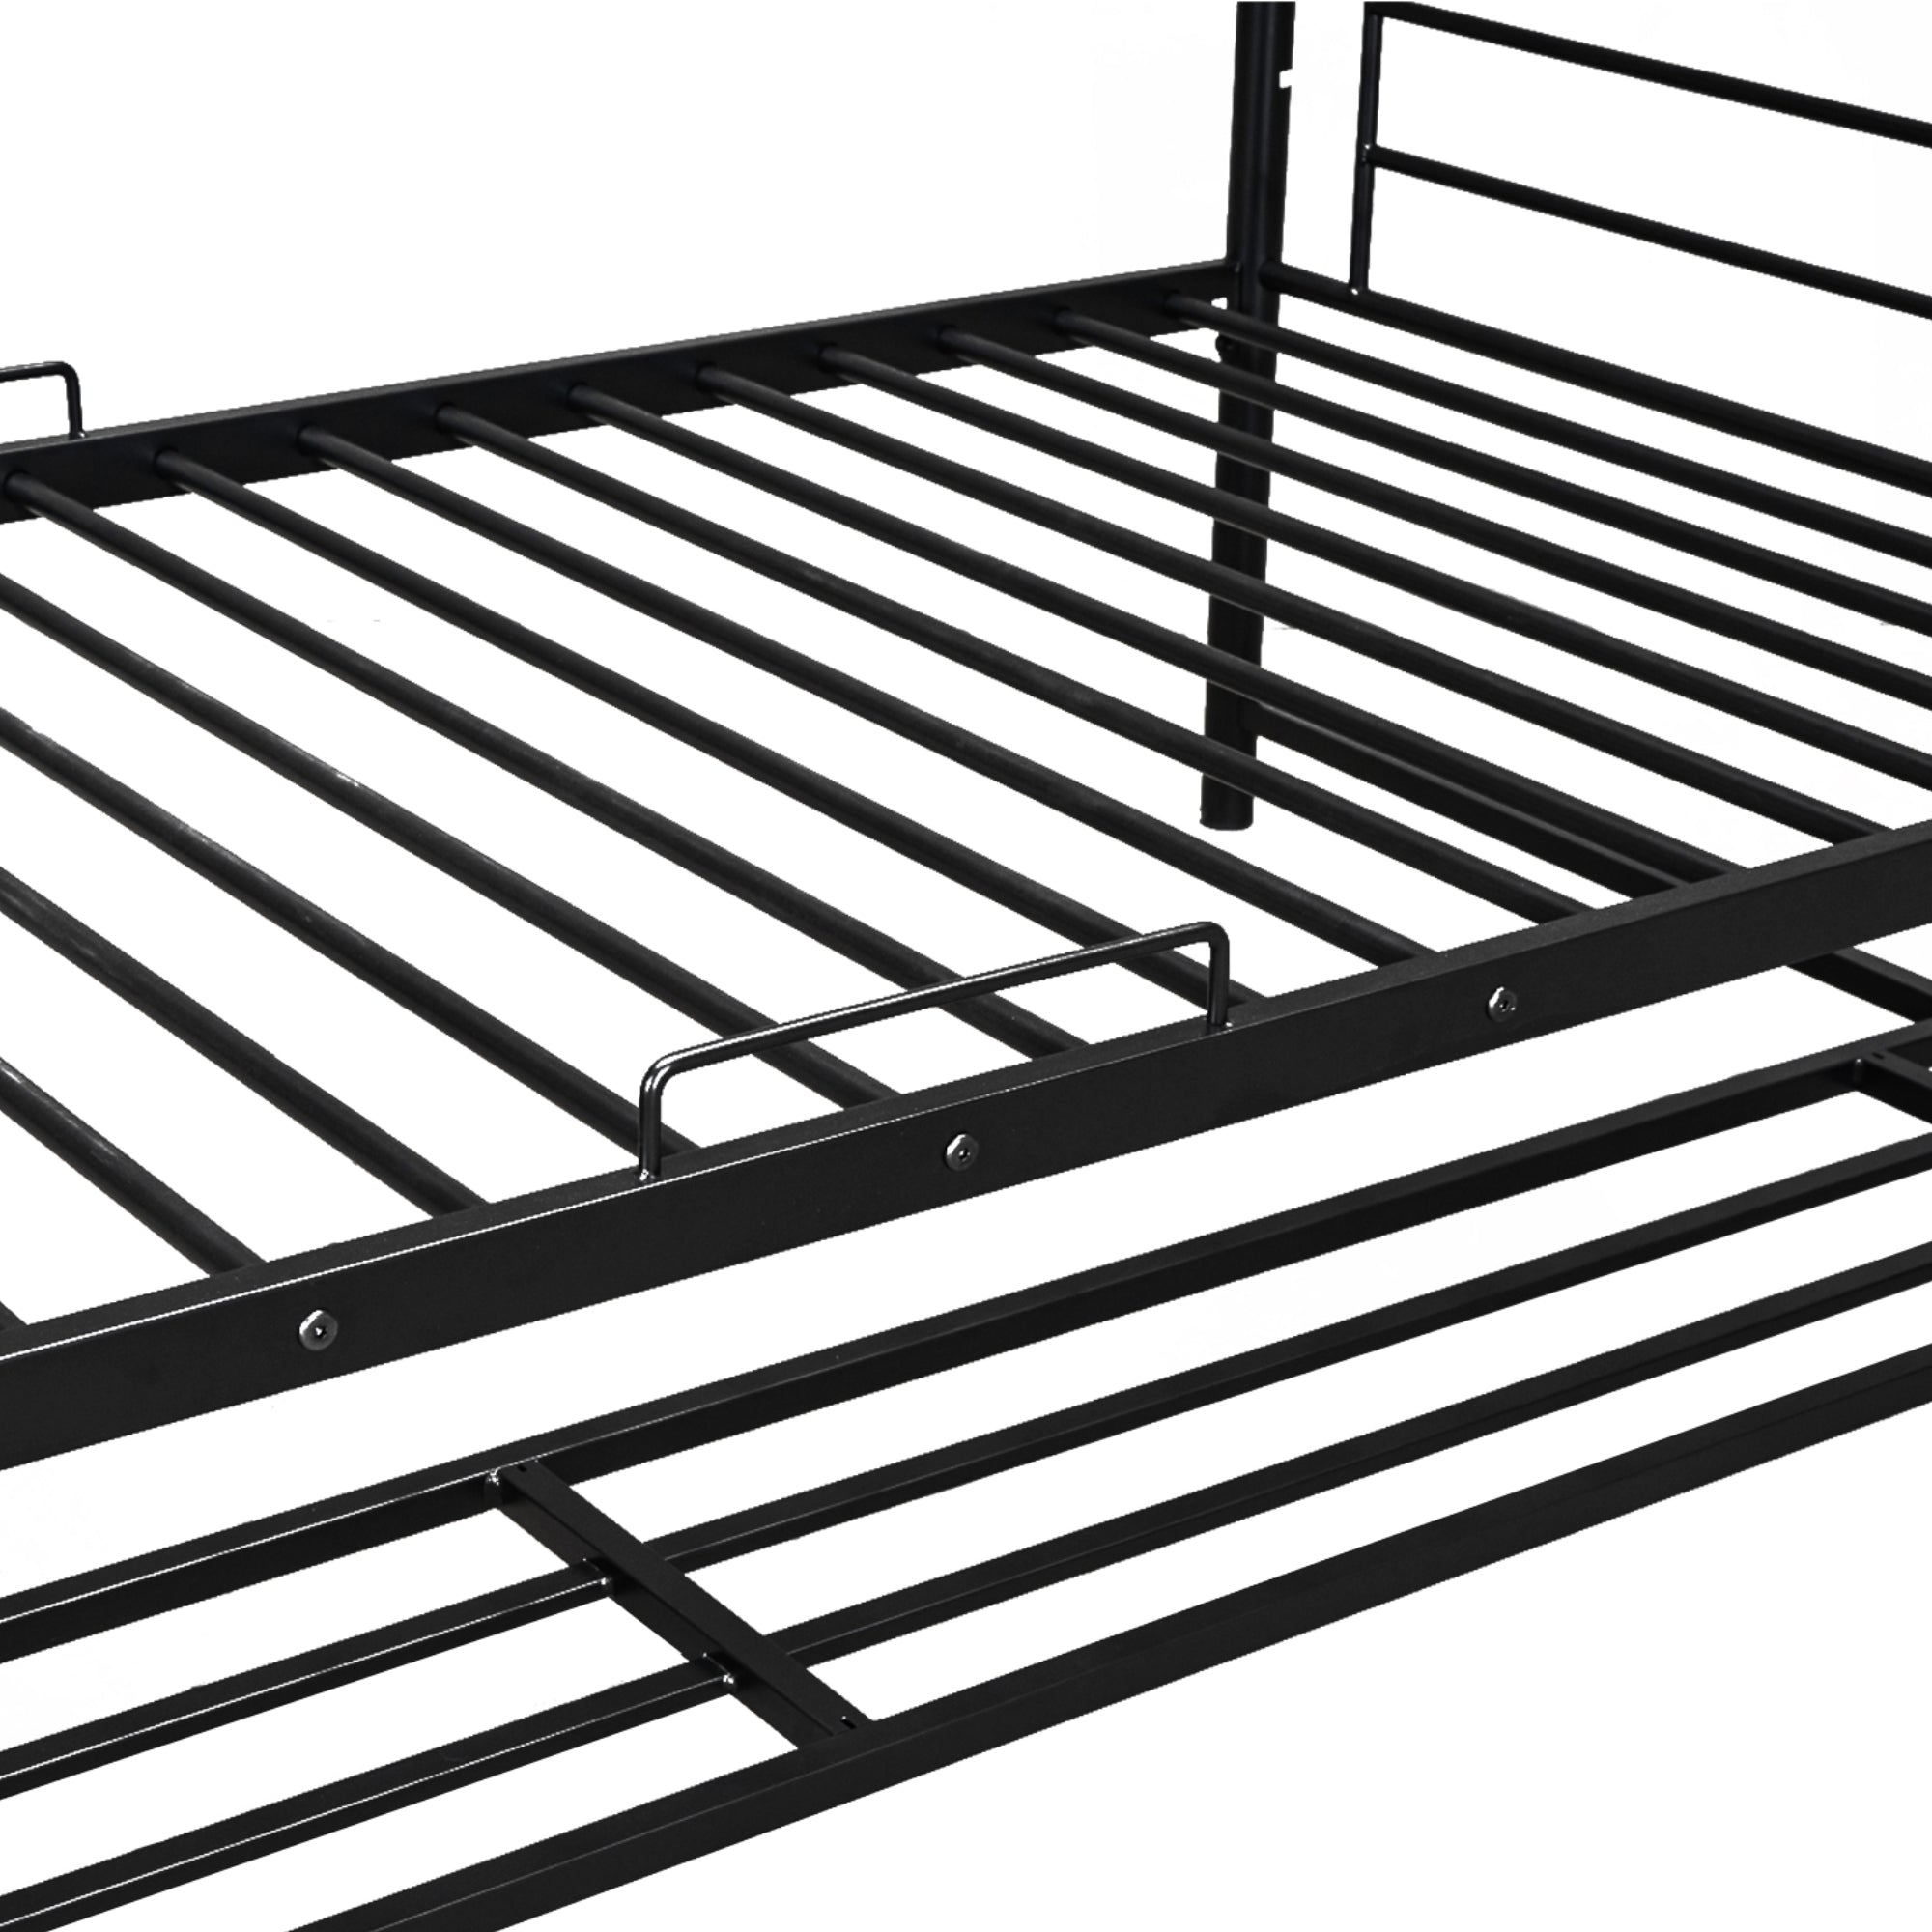 Bellemave® Metal Bunk Bed with Shelf and Guardrails Bellemave®